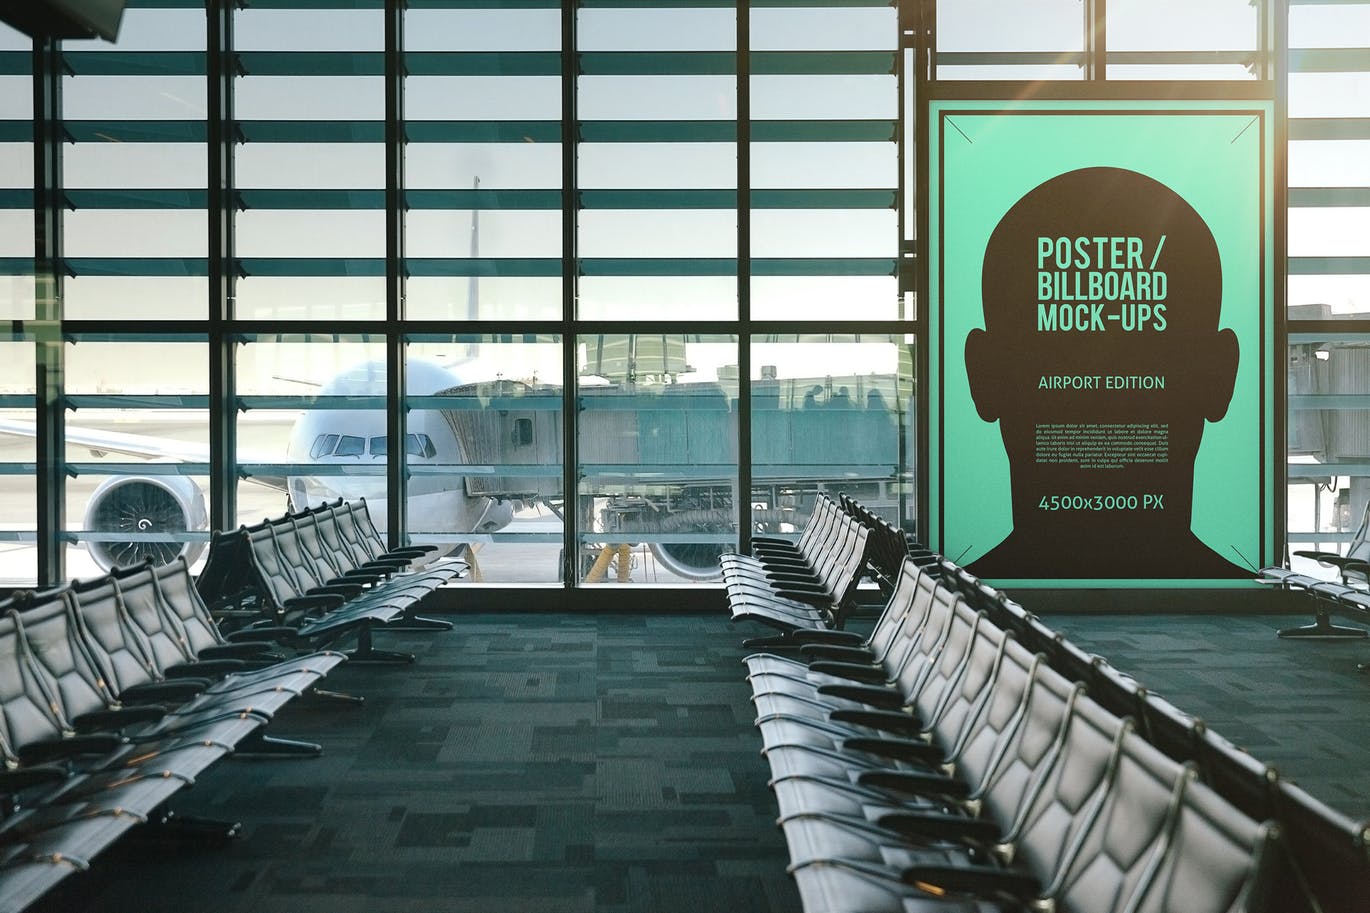 机场候机室海报/广告牌样机第一素材精选模板#1 Poster / Billboard Mock-ups – Airport Edition #1插图